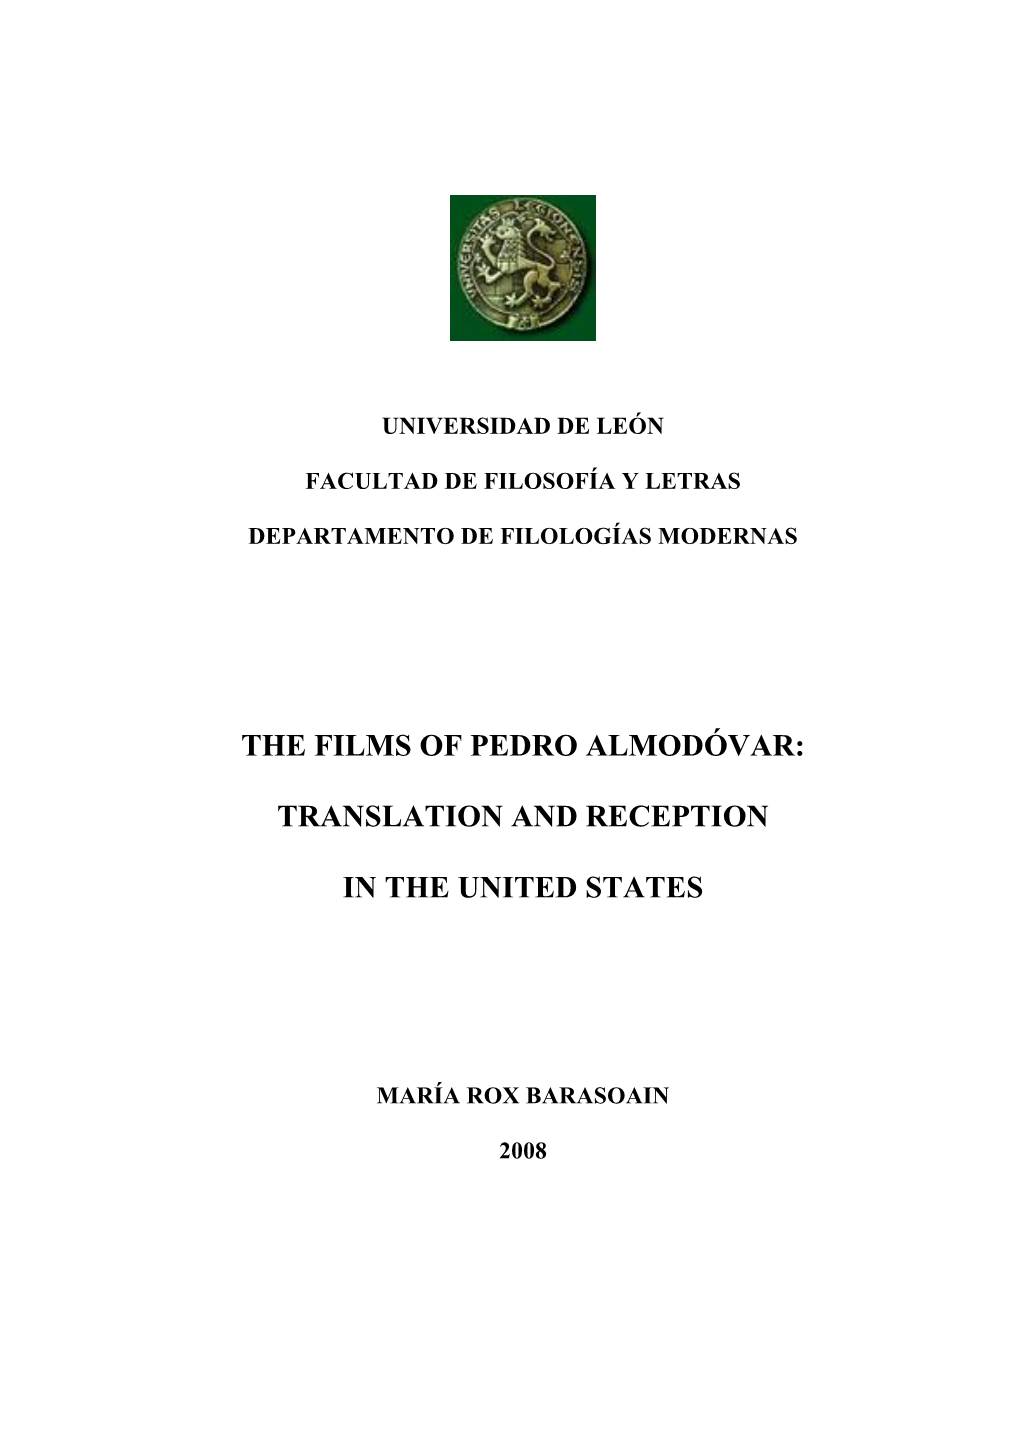 The Films of Pedro Almodóvar